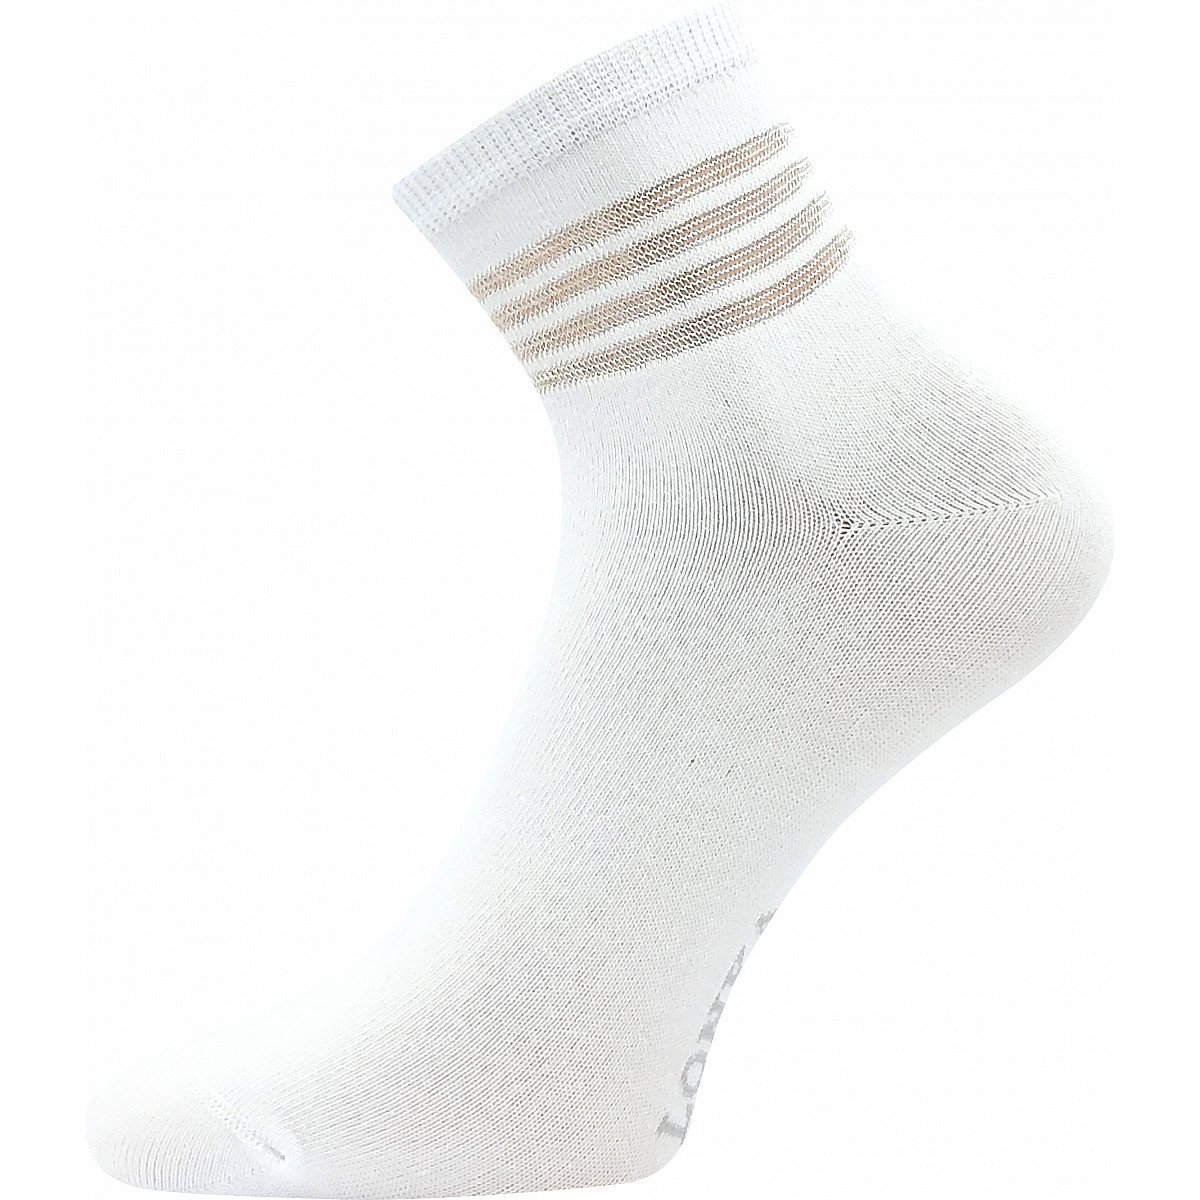 Ponožky dámské Lonka Fasketa - bílé, 35-38